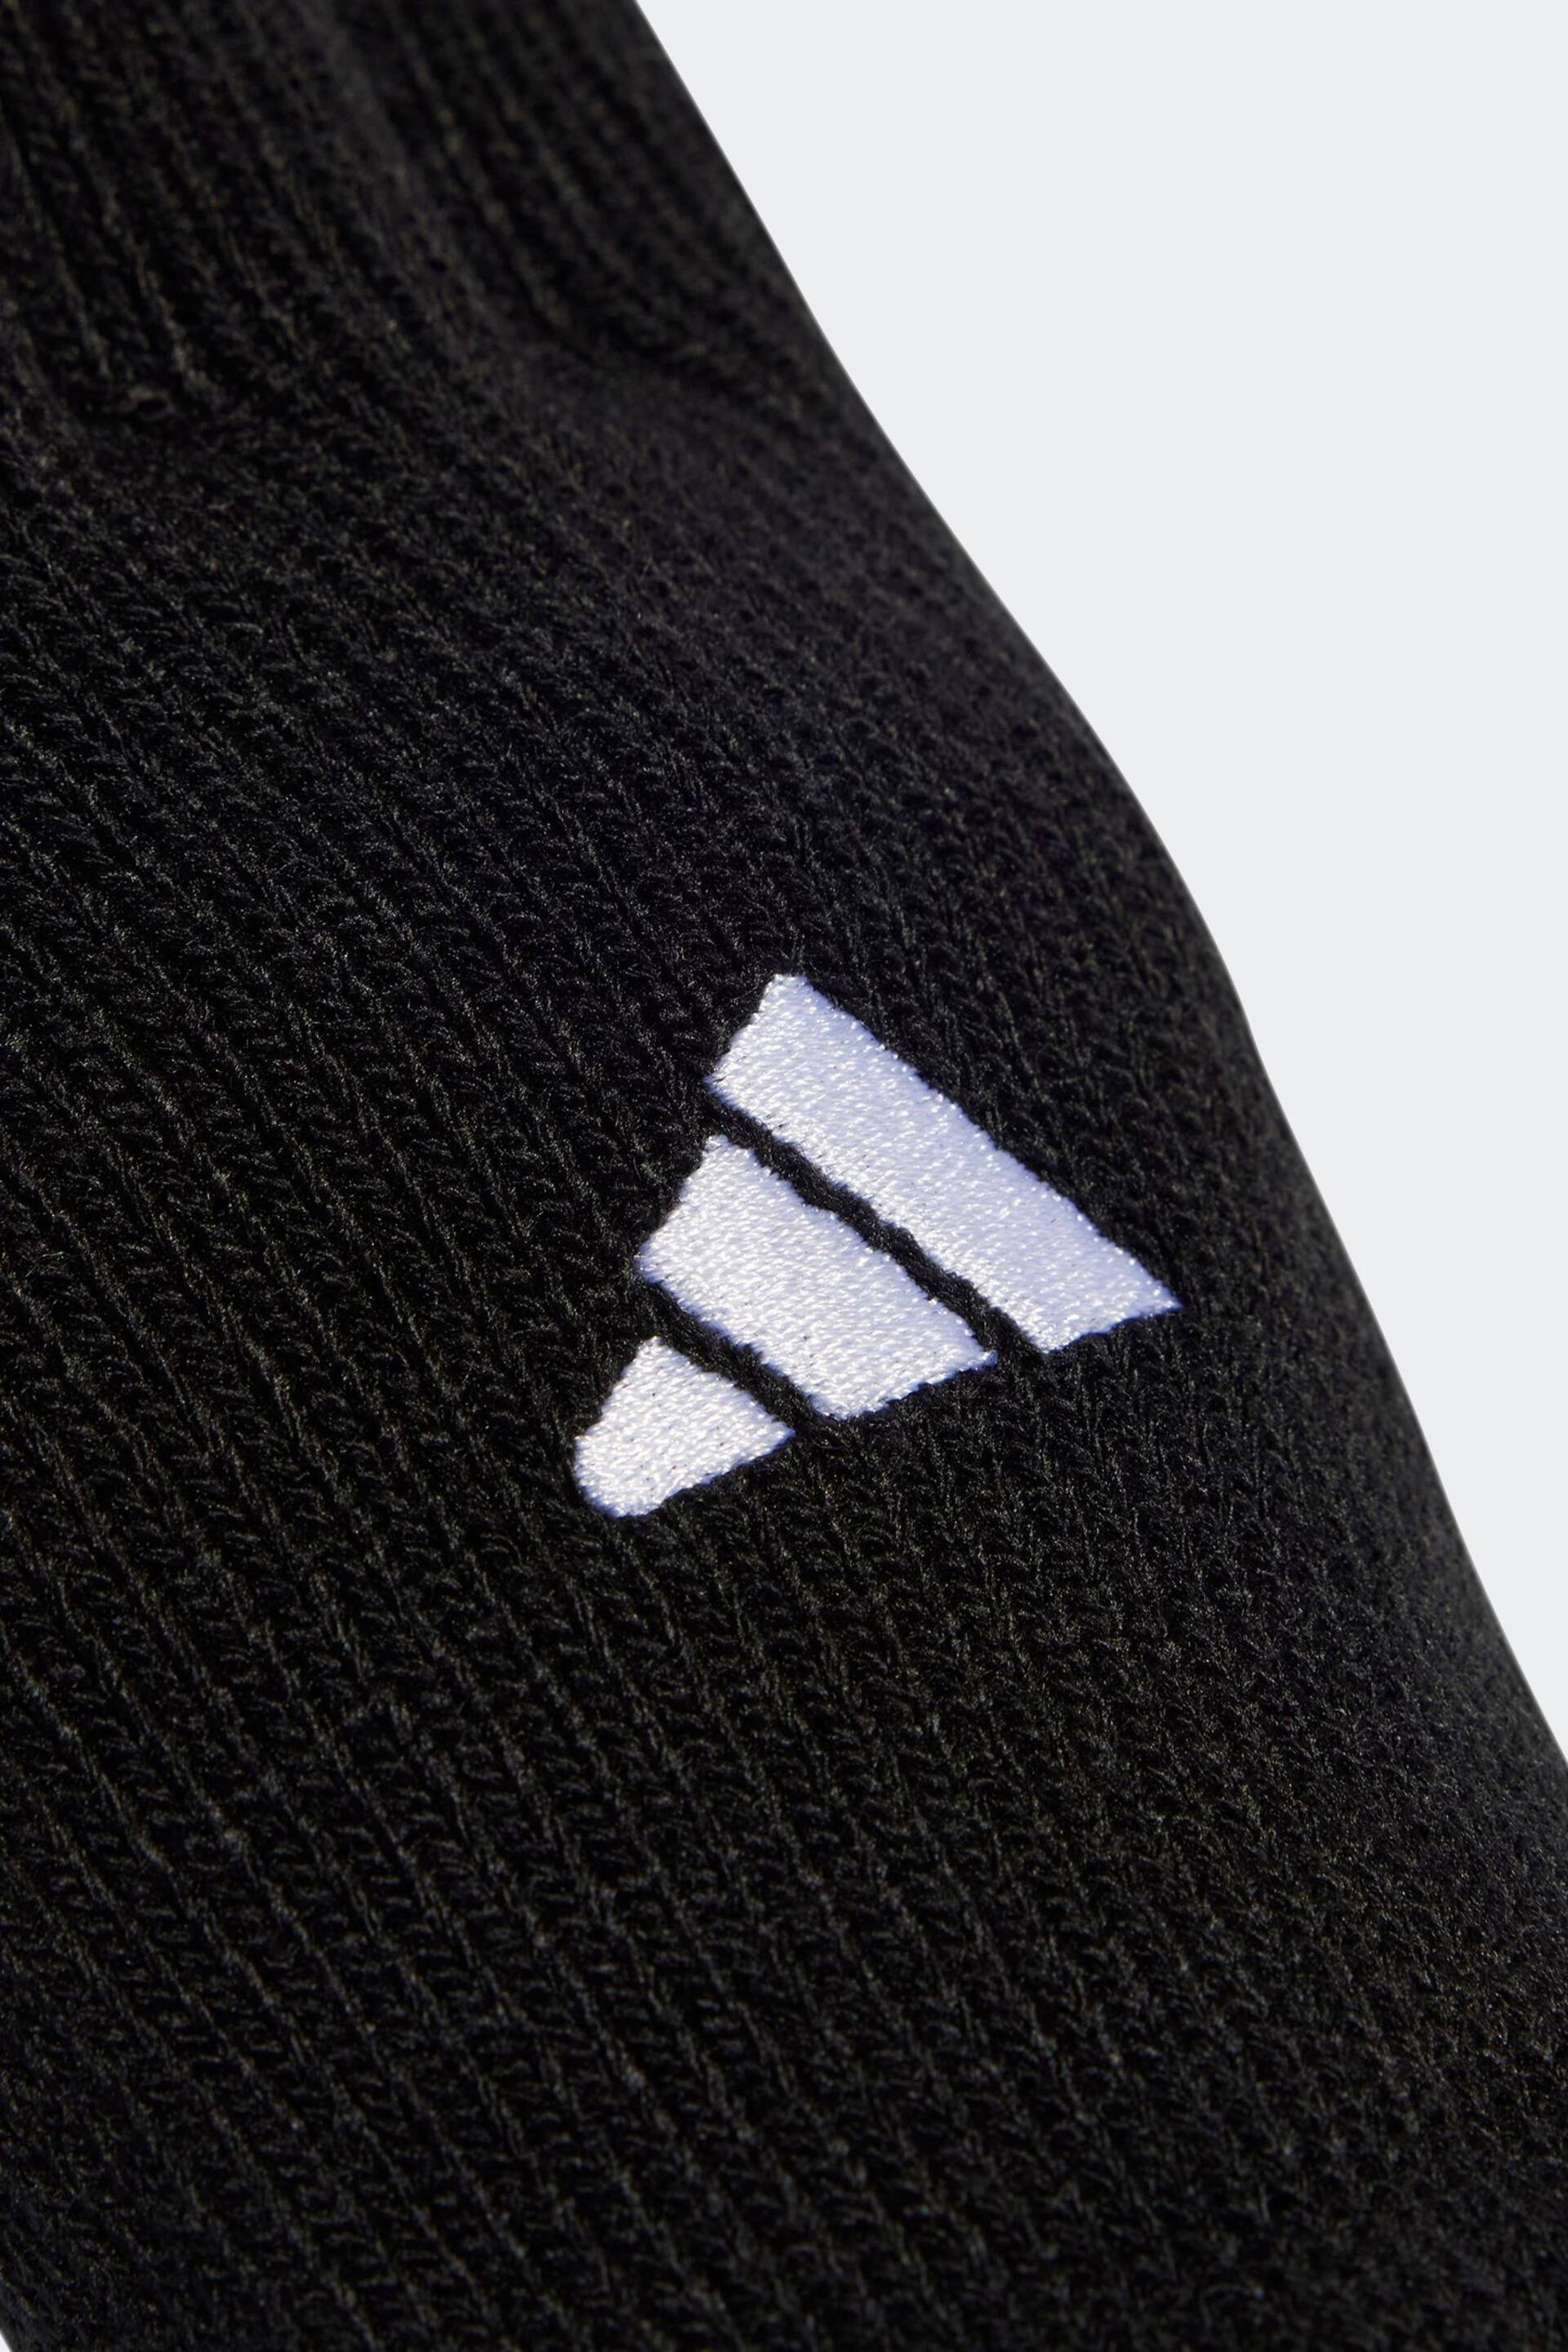 adidas Black/White Football Black/White Gloves - Image 2 of 3